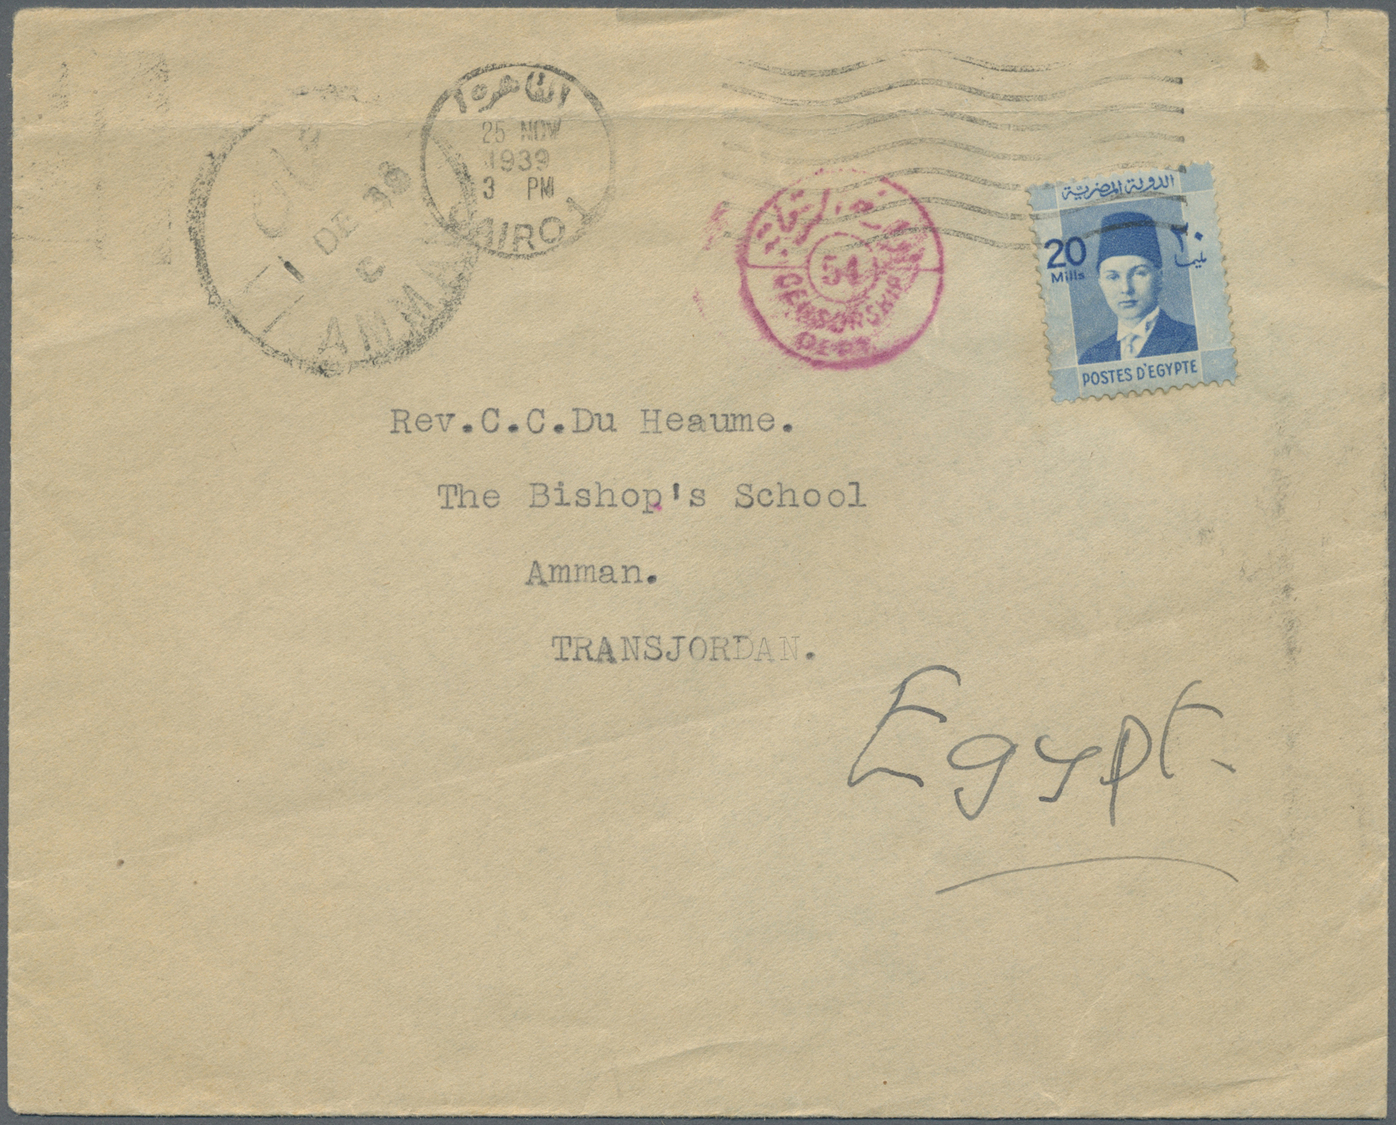 Br Jordanien: 1939. Censored Envelope Addressed To 'The Bishop's School, Amman, Jordan' Bearing Egypt 20m Blue Tied By C - Jordan